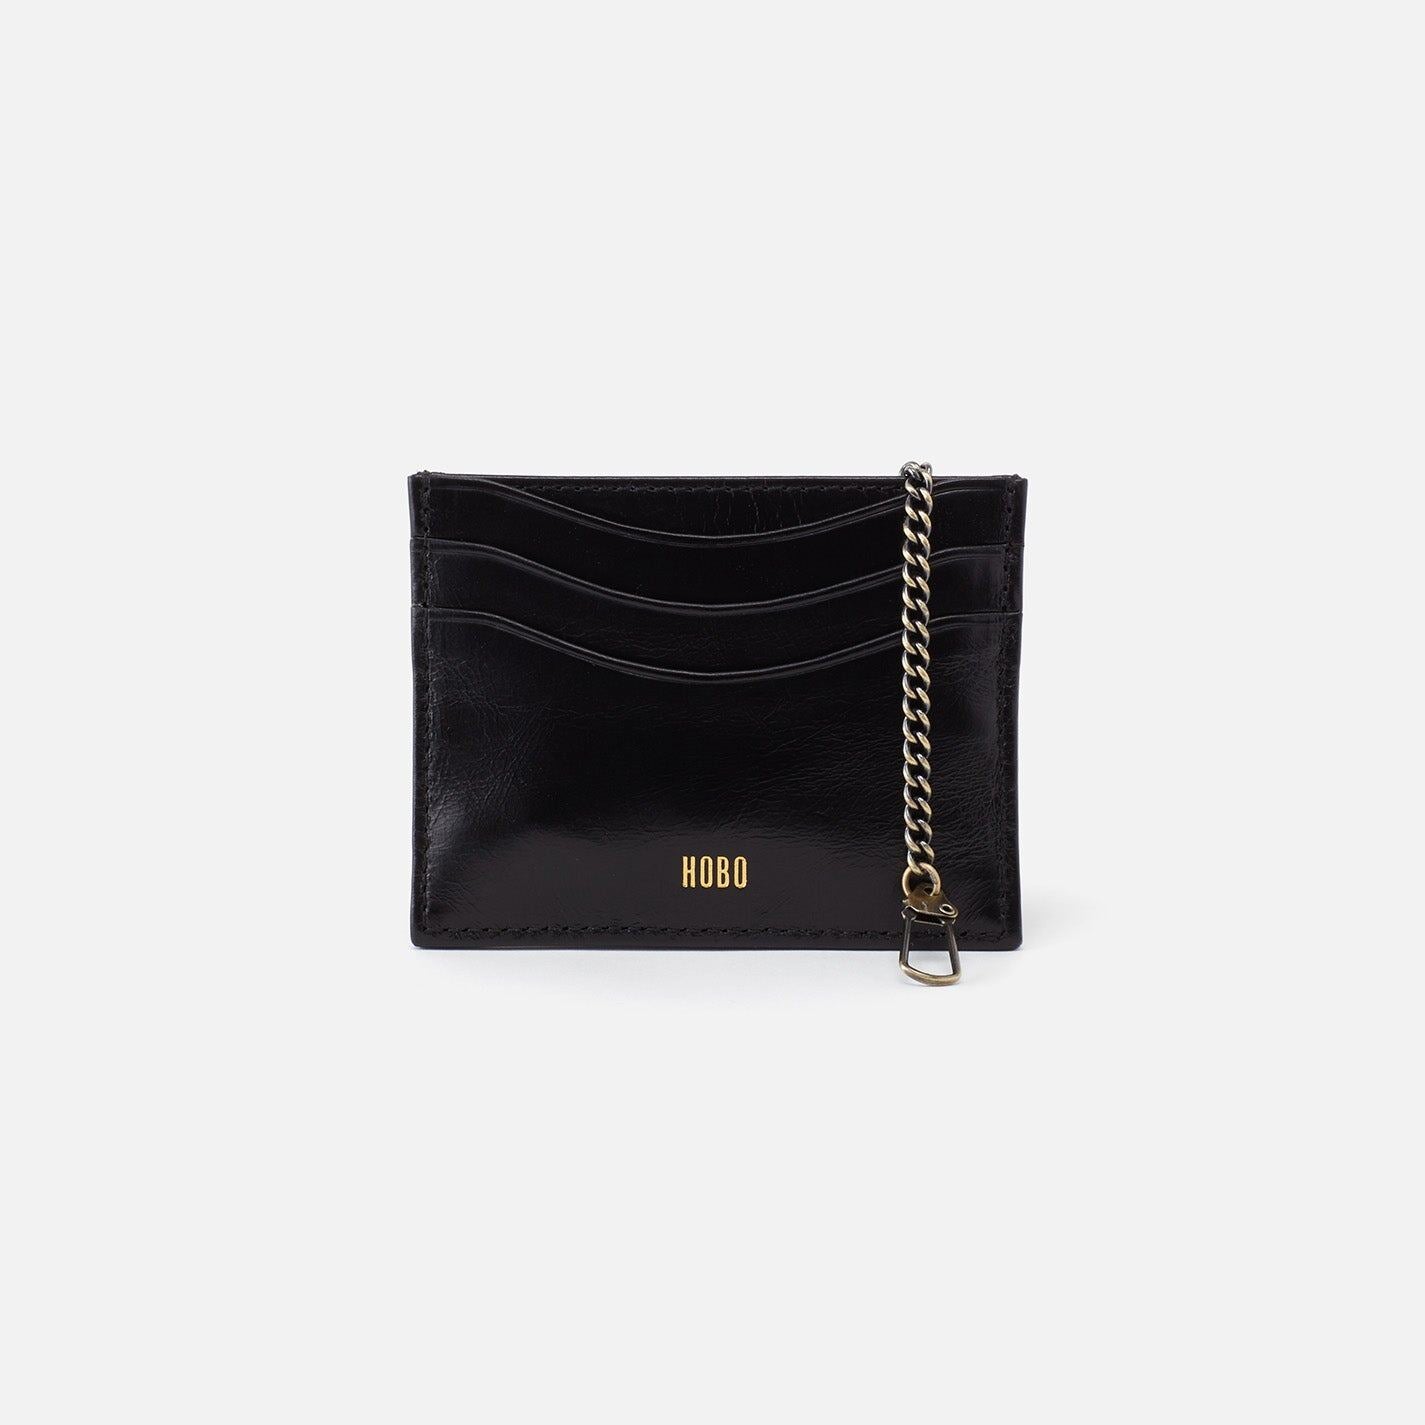 Hobo Bags “Max” Card Case-Black